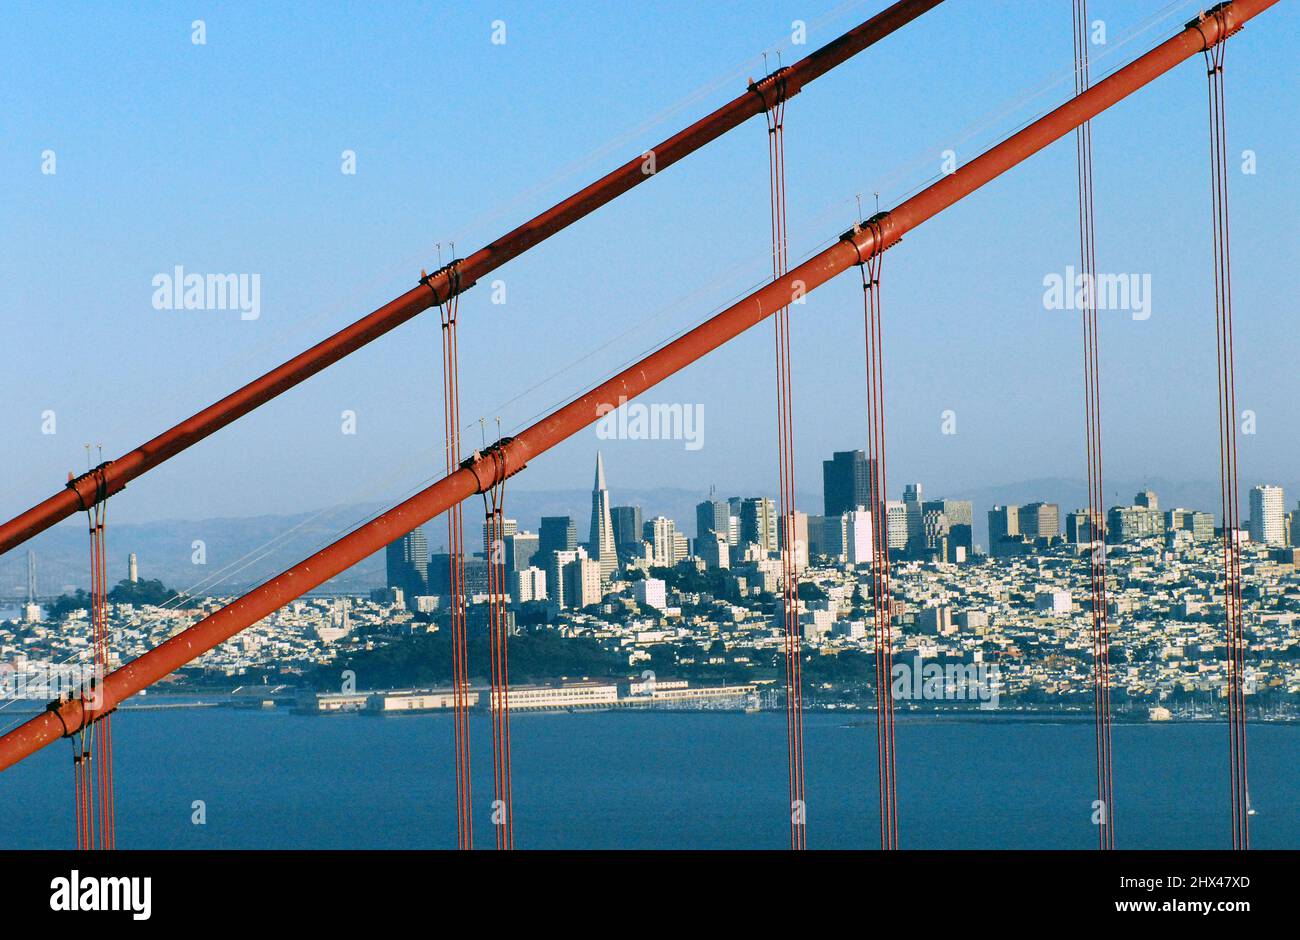 A unique view of beautiful San Francisco through the suspension cables of the famous Golden Gate Bridge. Stock Photo